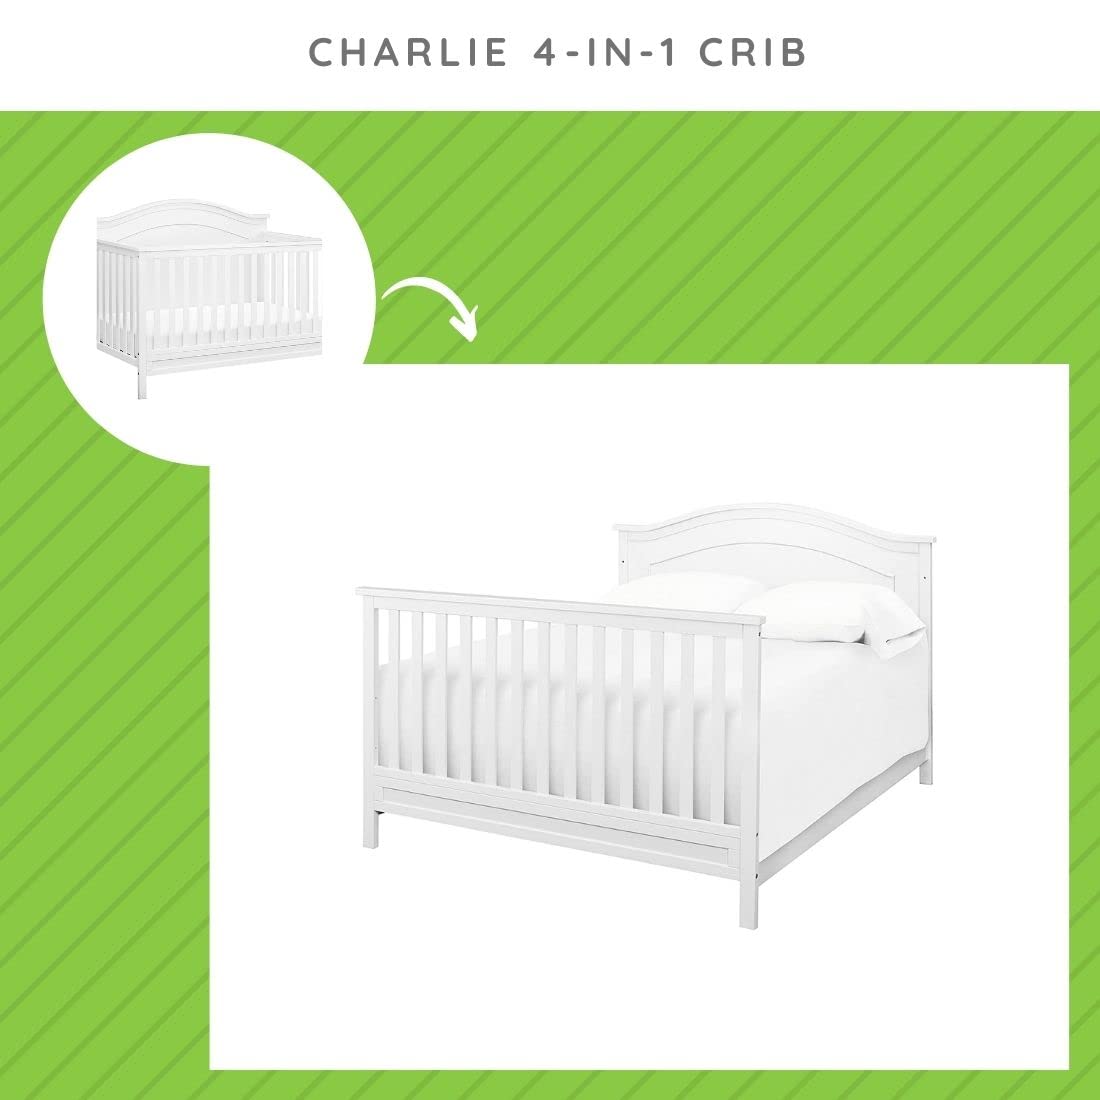 CC KITS Full Size Conversion Kit Bed Rails for Davinci Charlie 4-in-1 Crib (White)